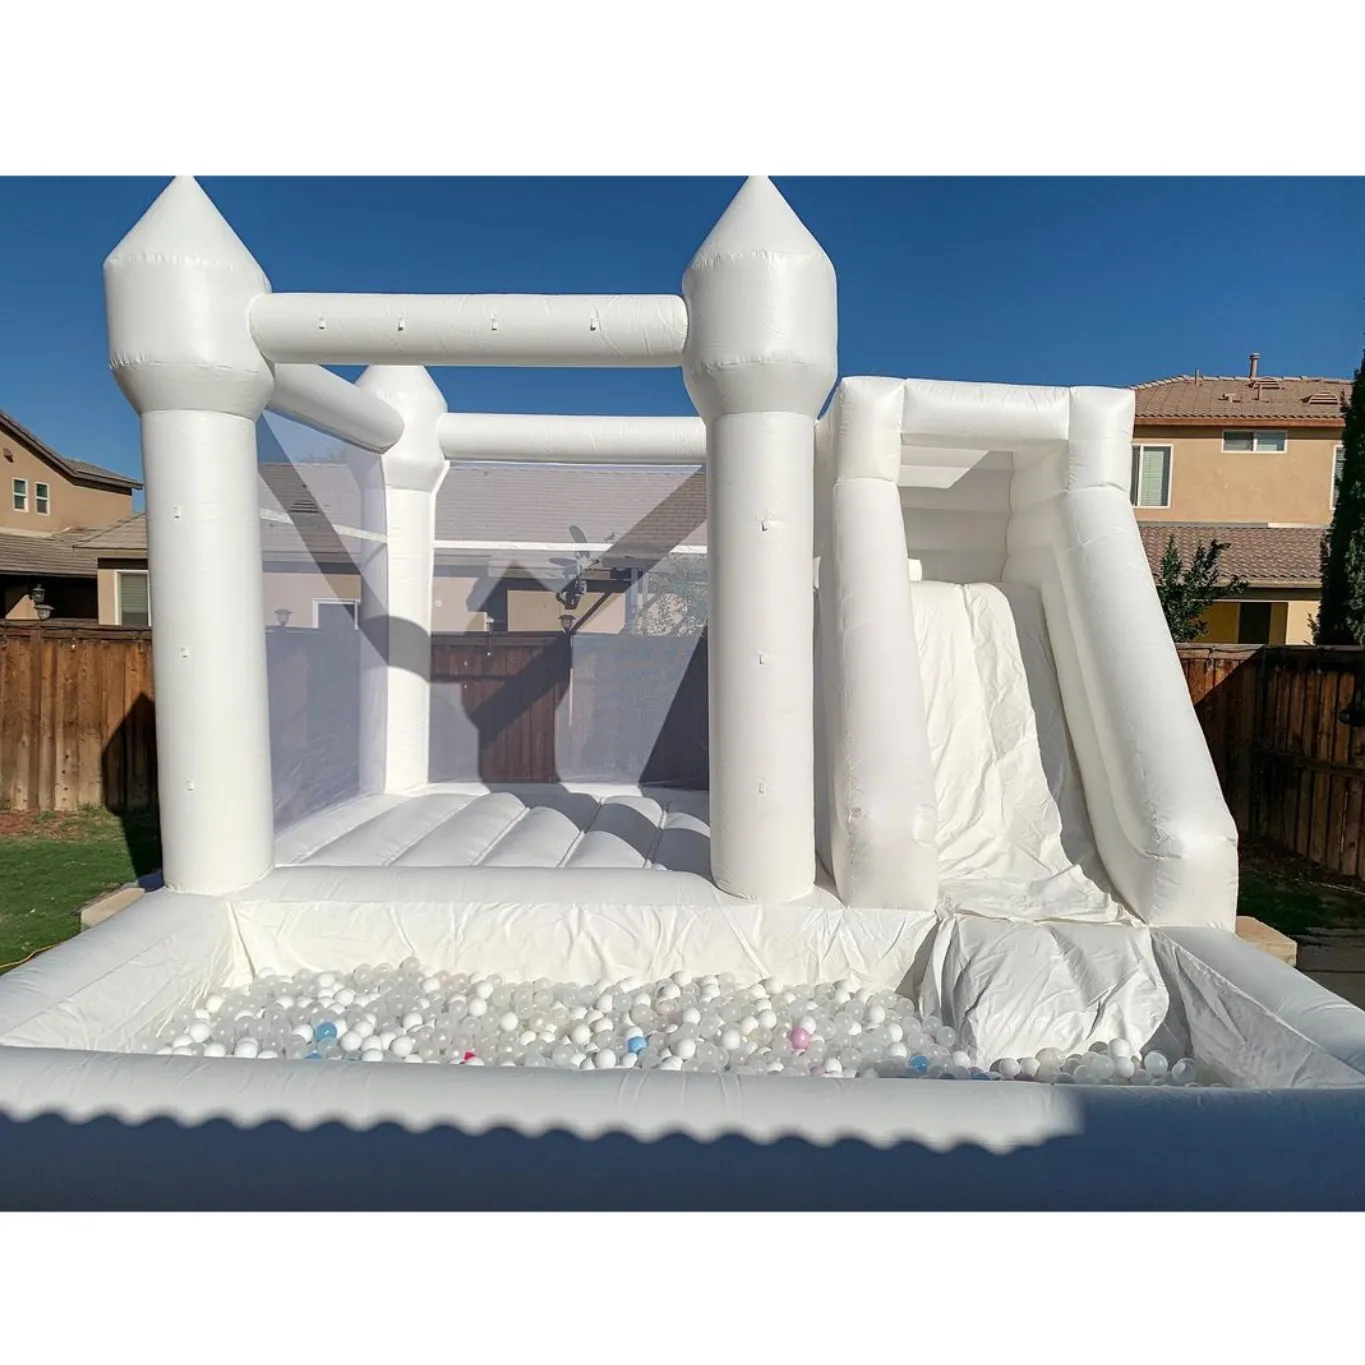 Bounce House kommerzielles aufblasbares Bouncer Softplay-Gerät aufblasbares weißes Bounce-Haus mit Rutsche